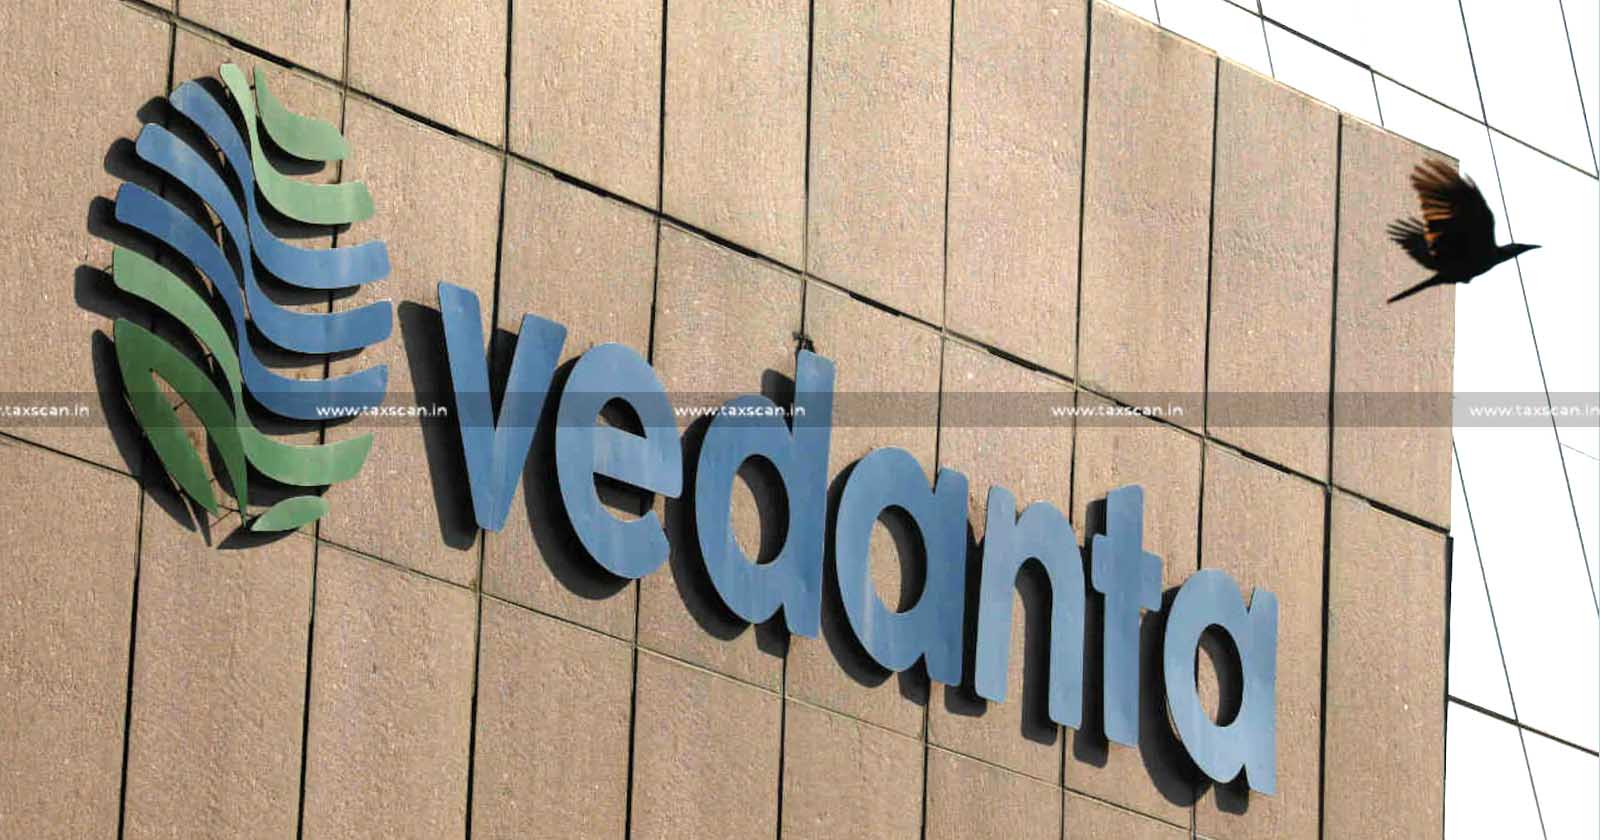 Vedanta Limited - CESTAT - Cenvat credit - supplementary invoices - Cenvat credit on supplementary invoices - taxscan